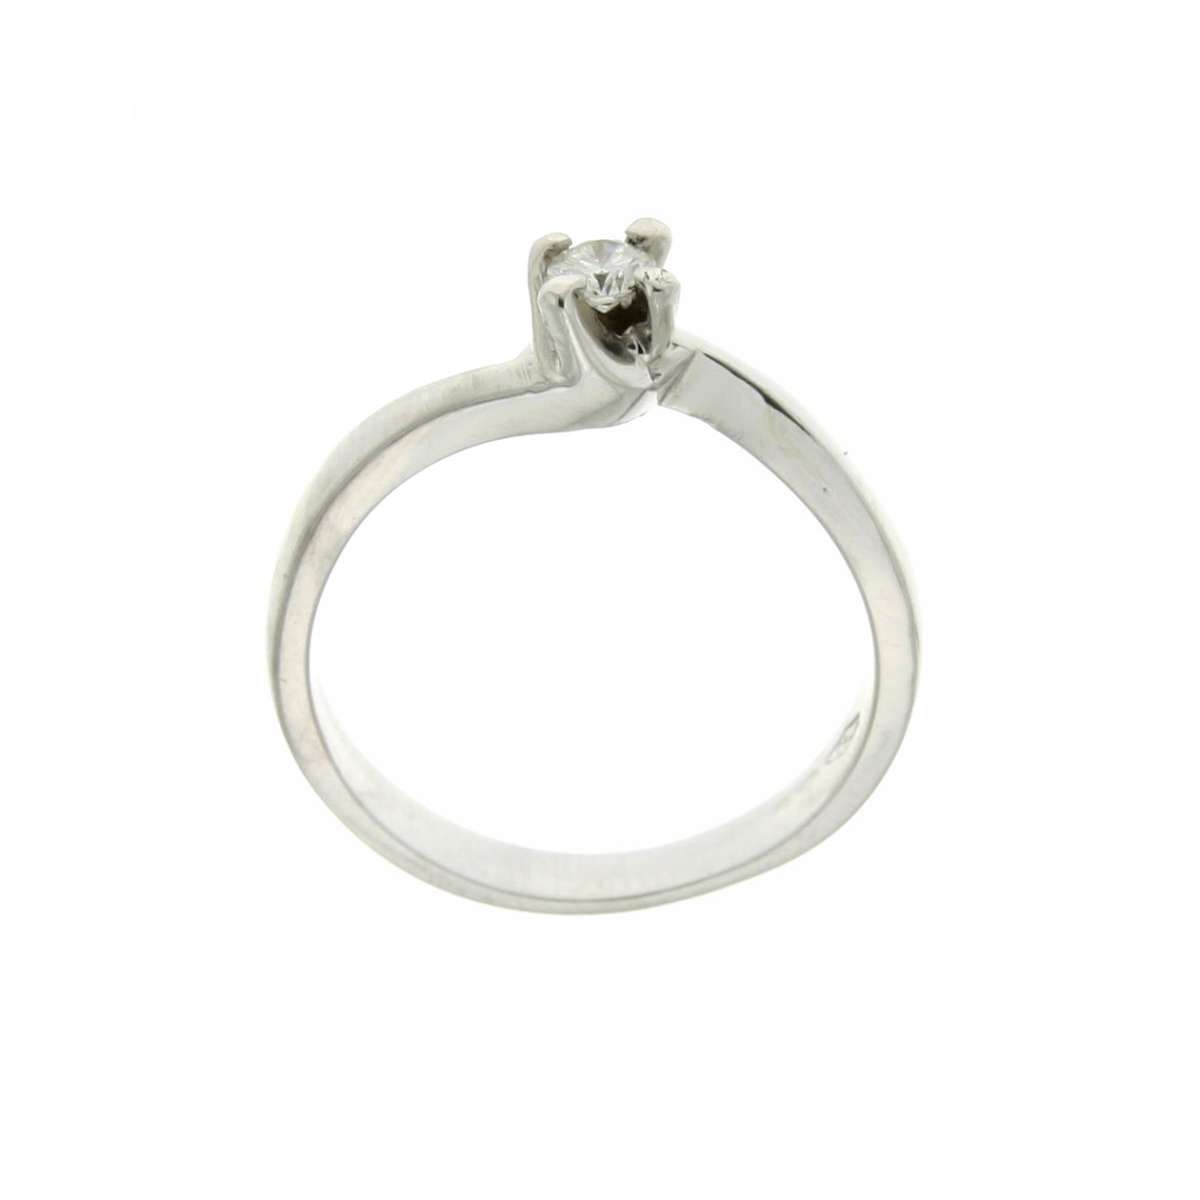 White gold Valentino style Solitaire Ring 0.15 carats diamonds G-VS1